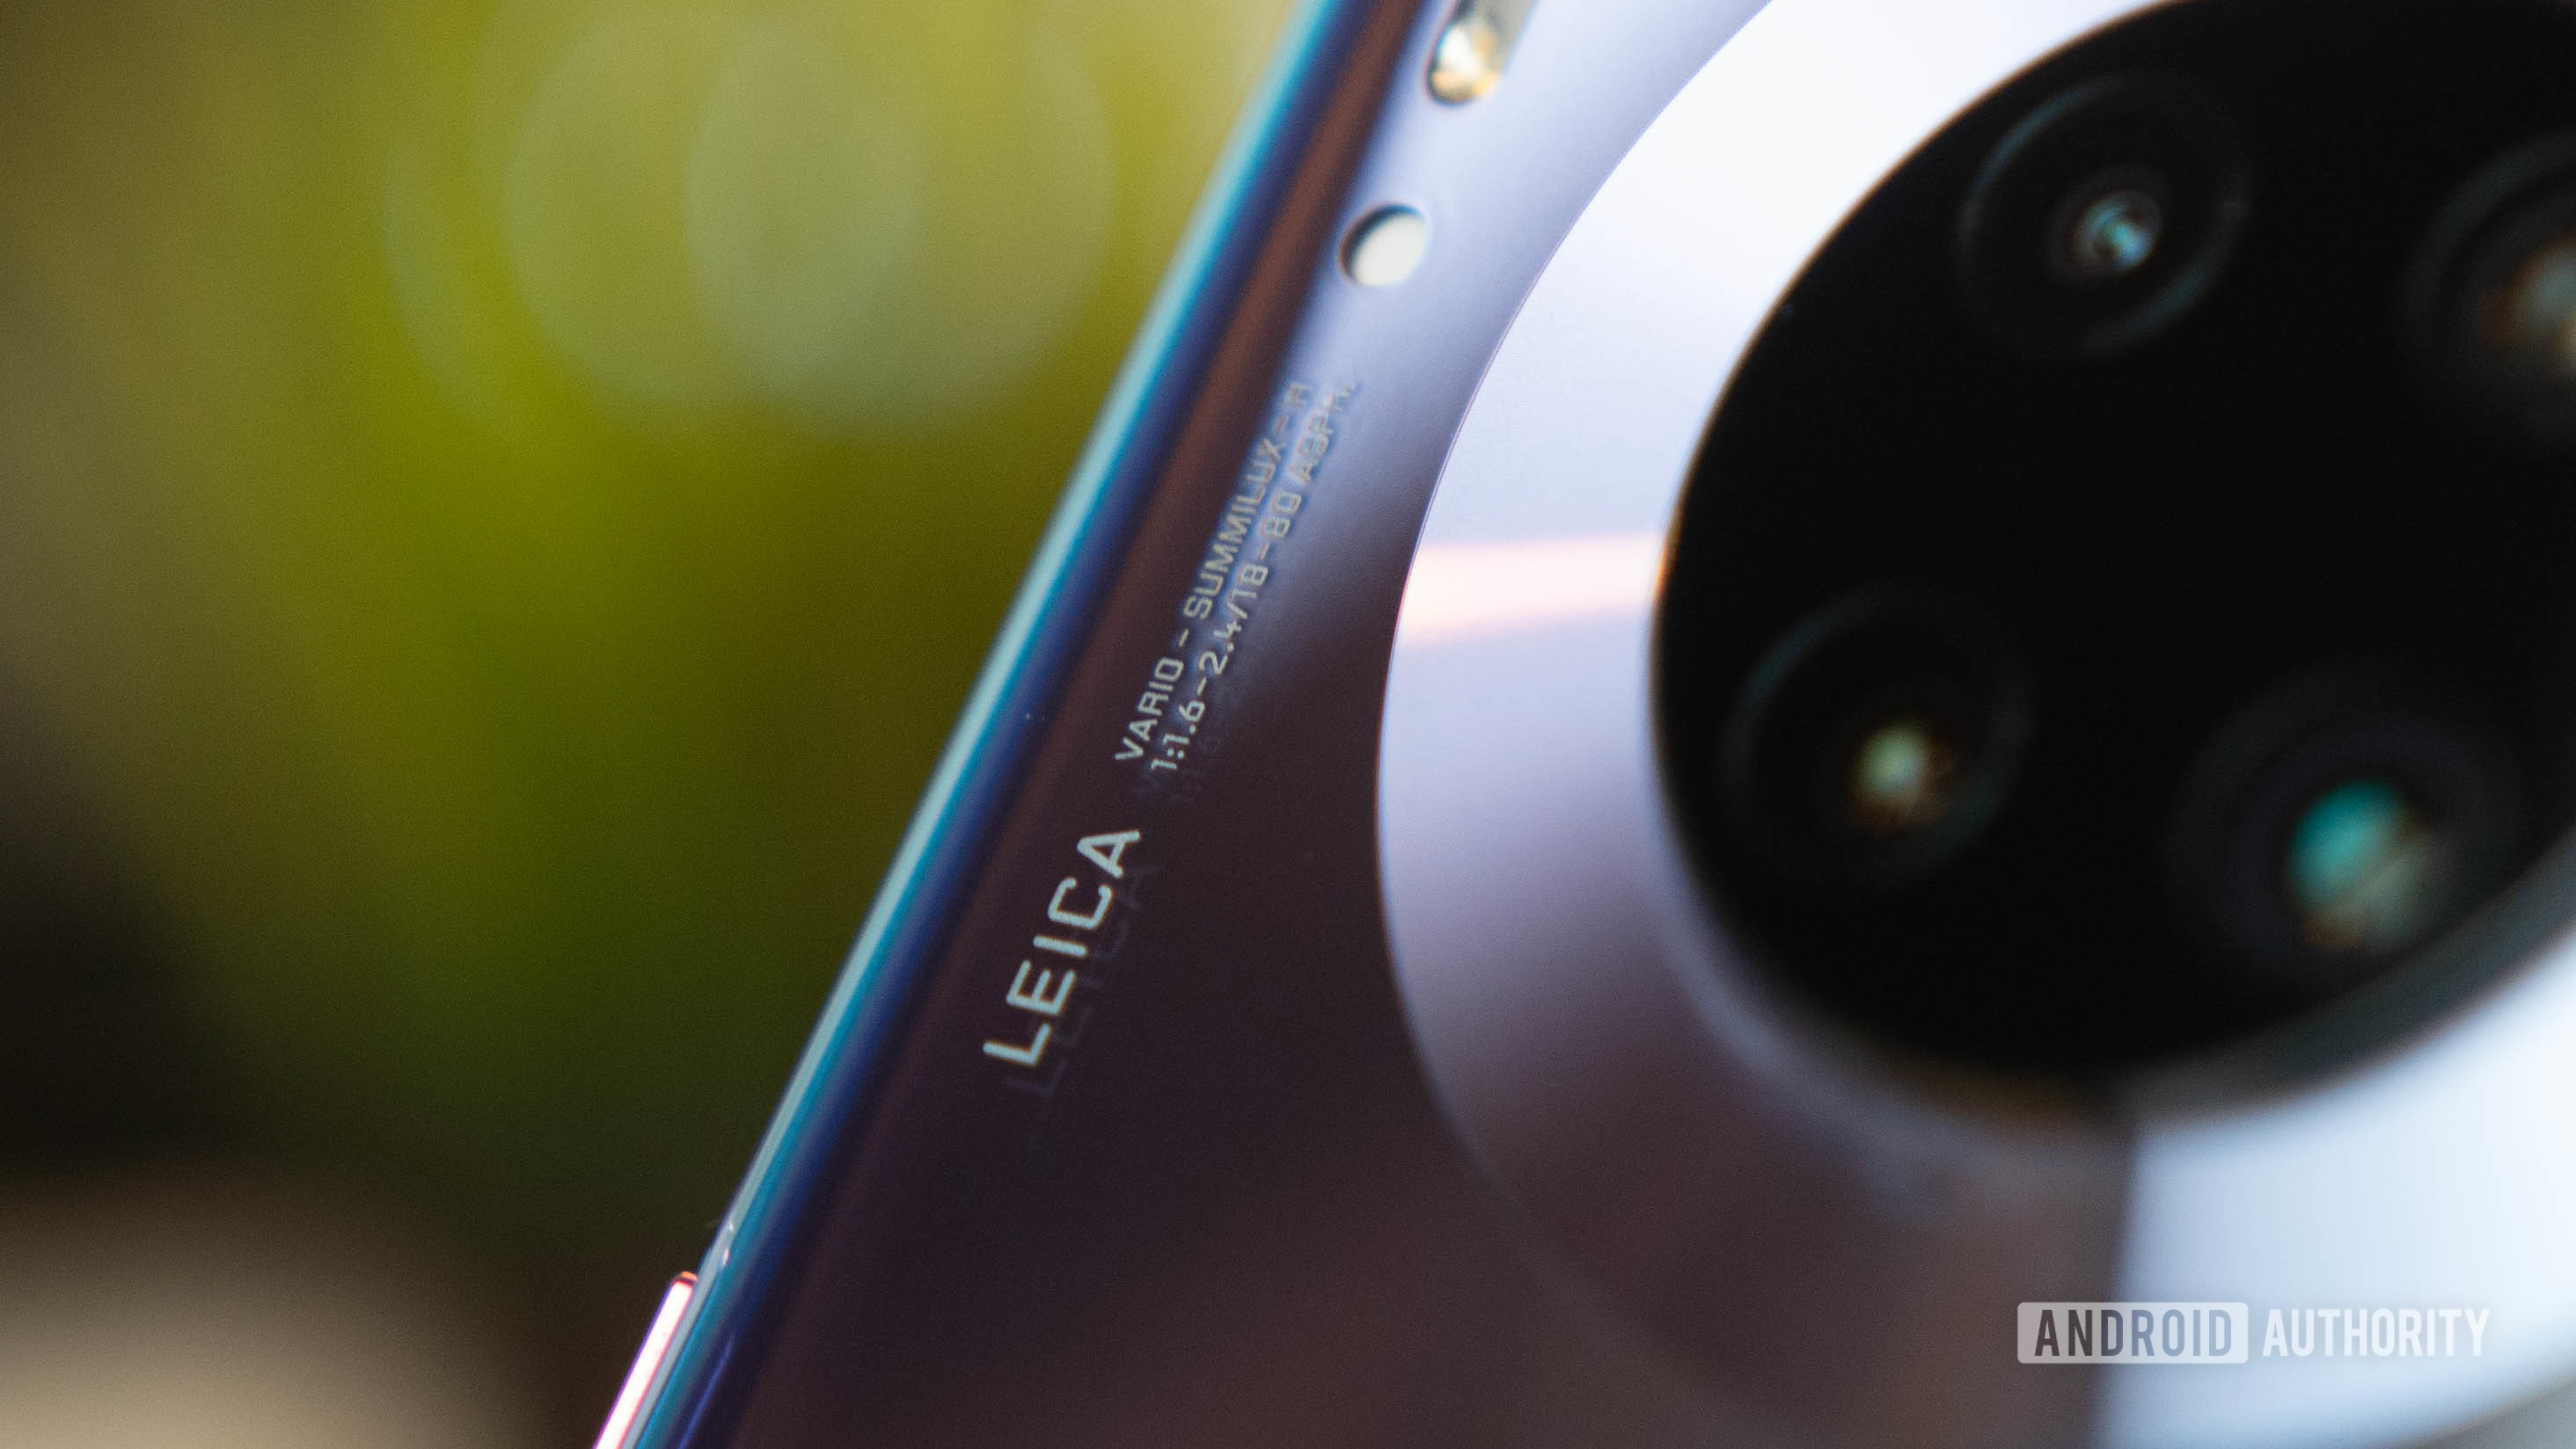 Has Huawei's partnership with Leica expired? Huawei says no.